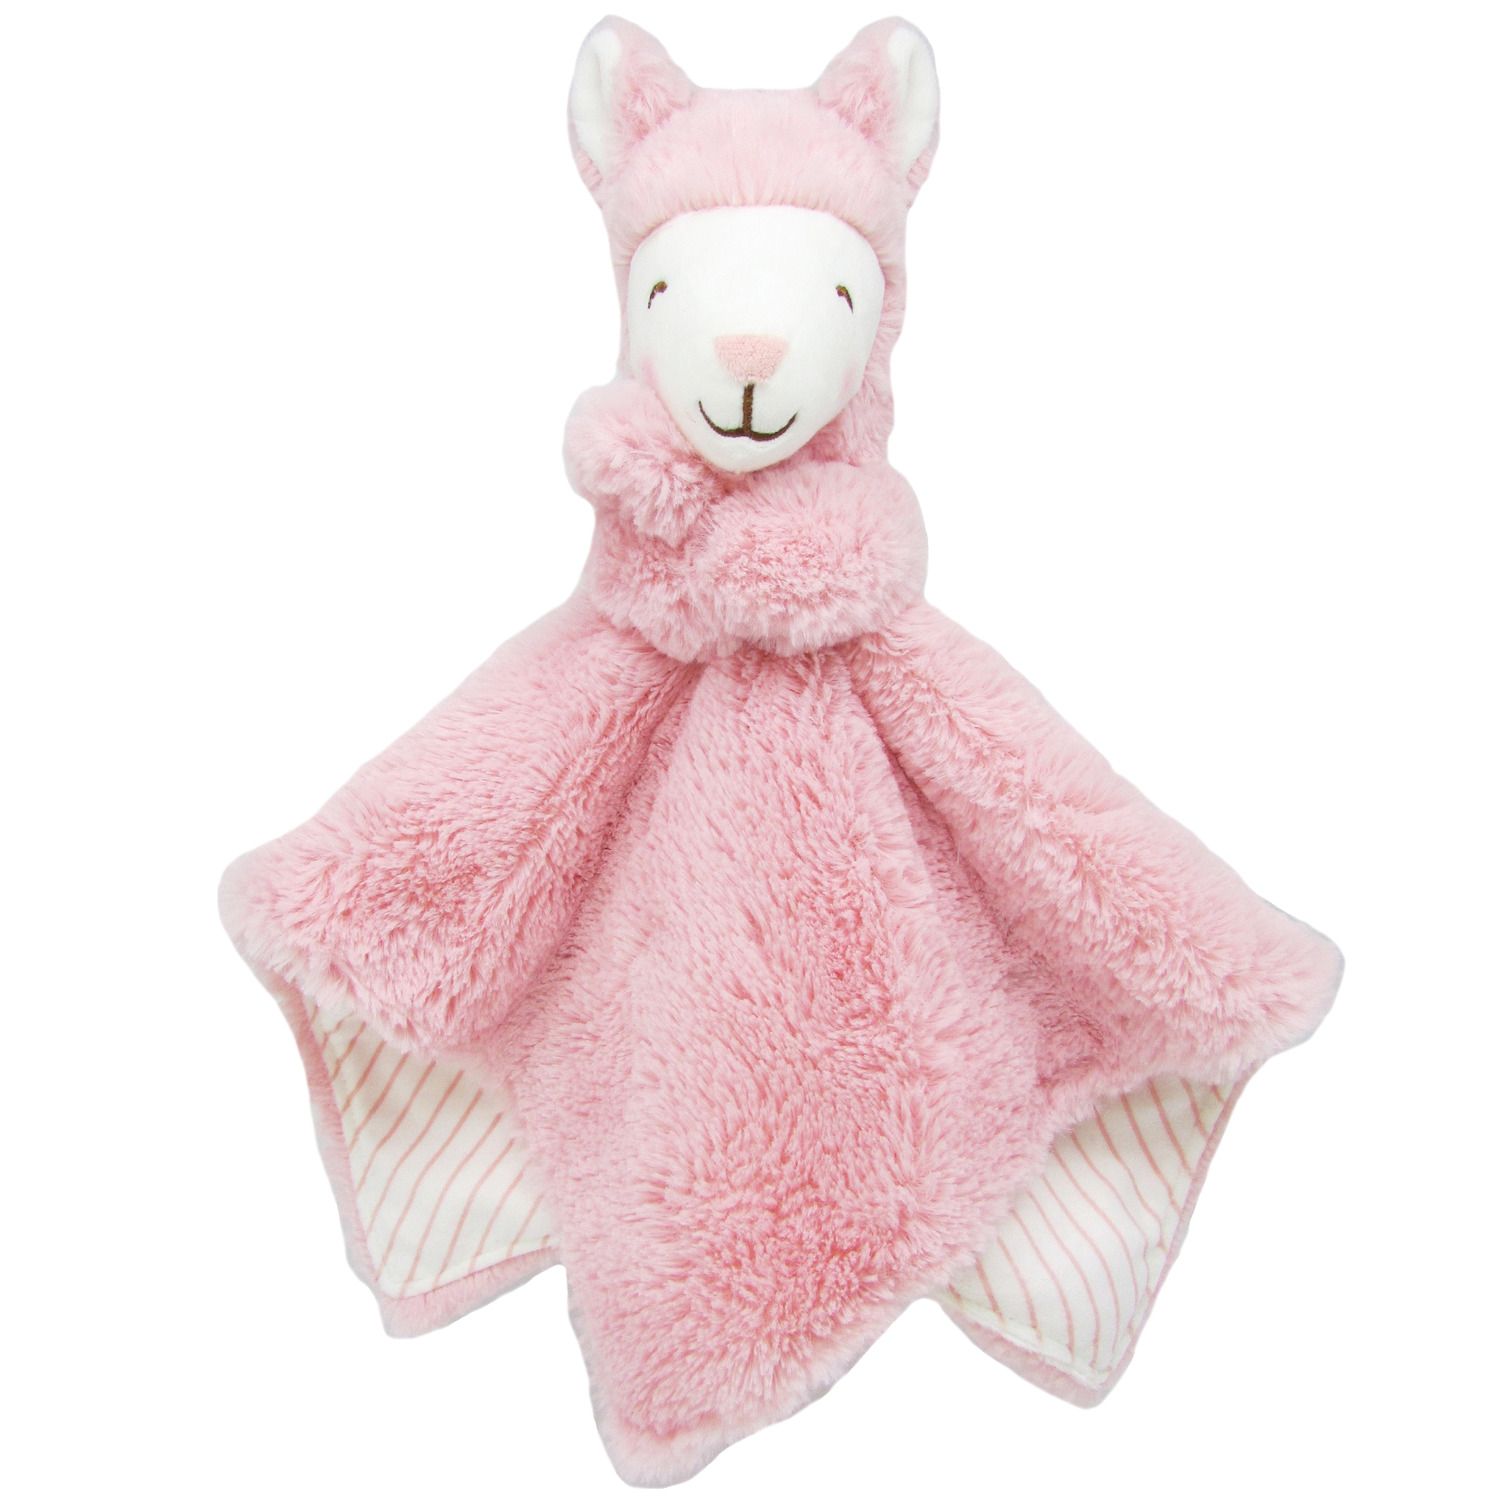 pink llama stuffed animal